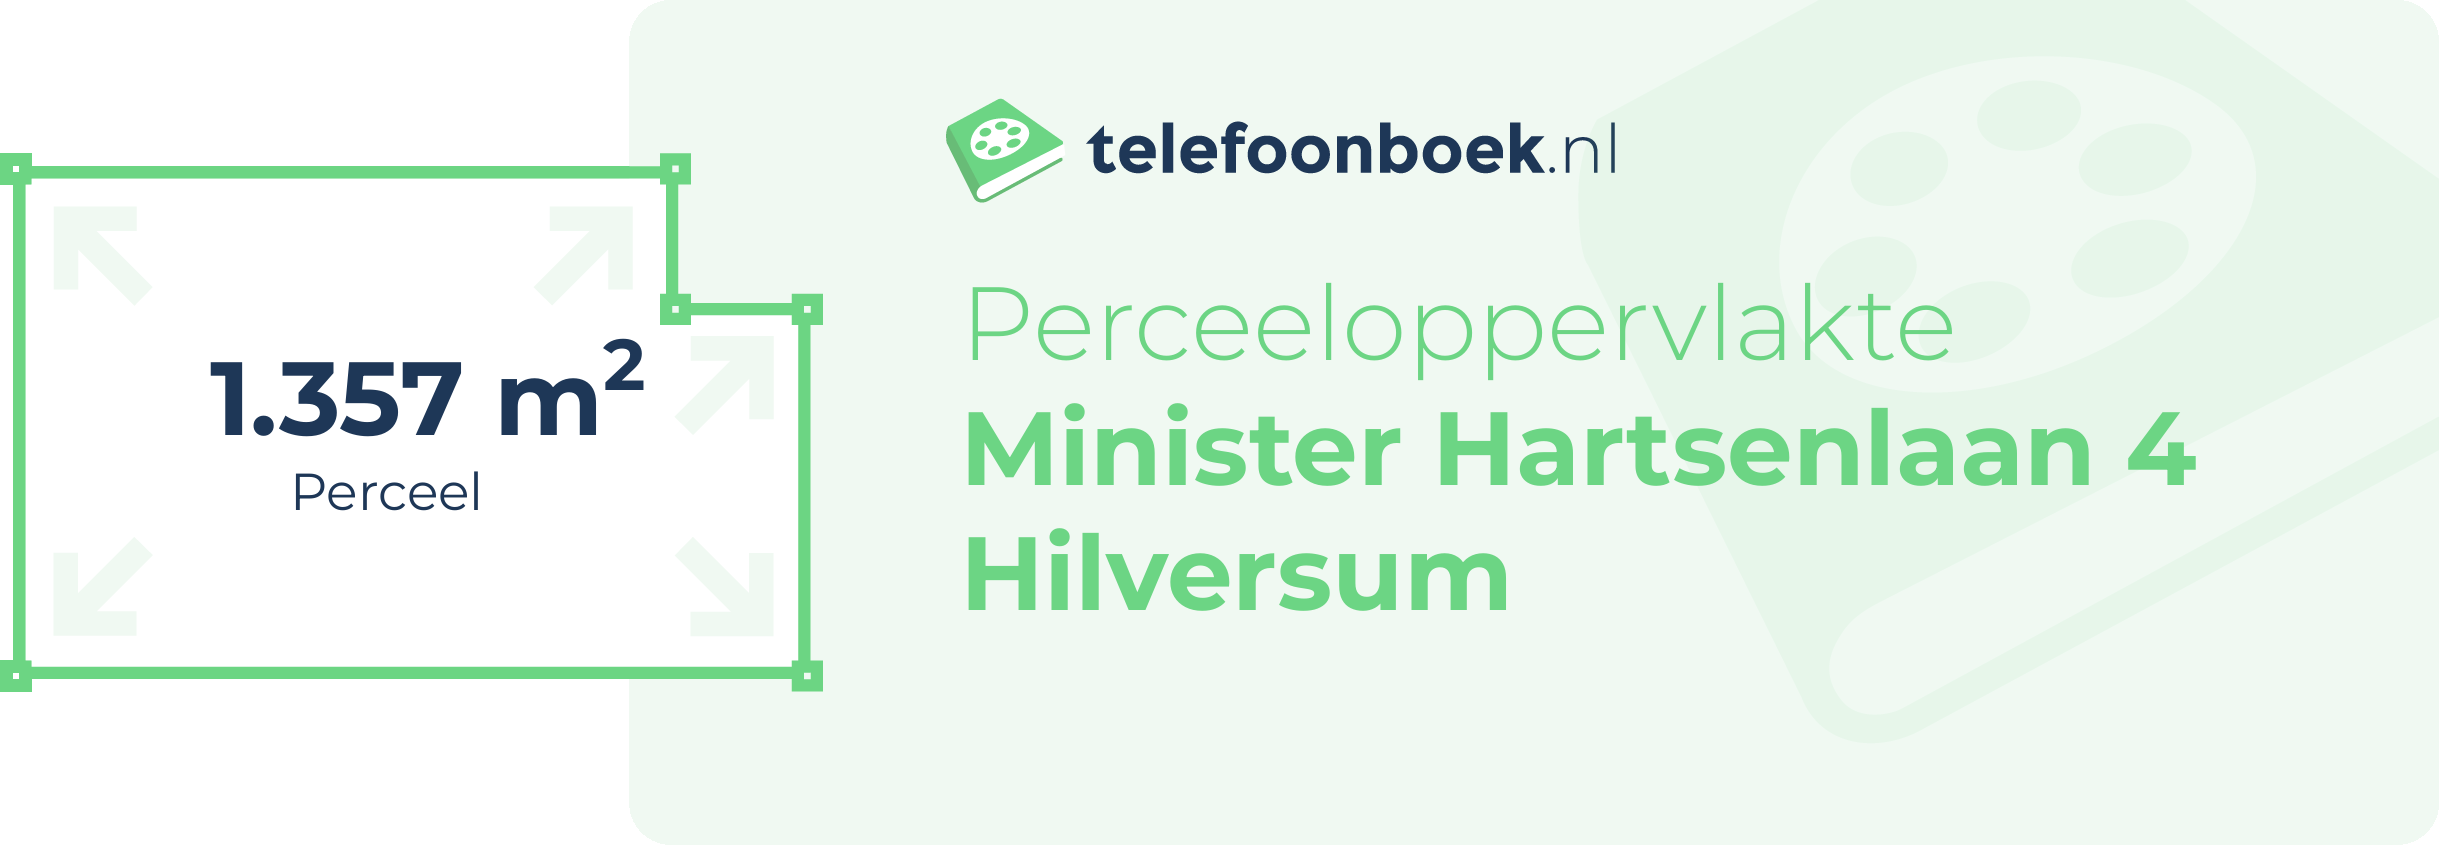 Perceeloppervlakte Minister Hartsenlaan 4 Hilversum